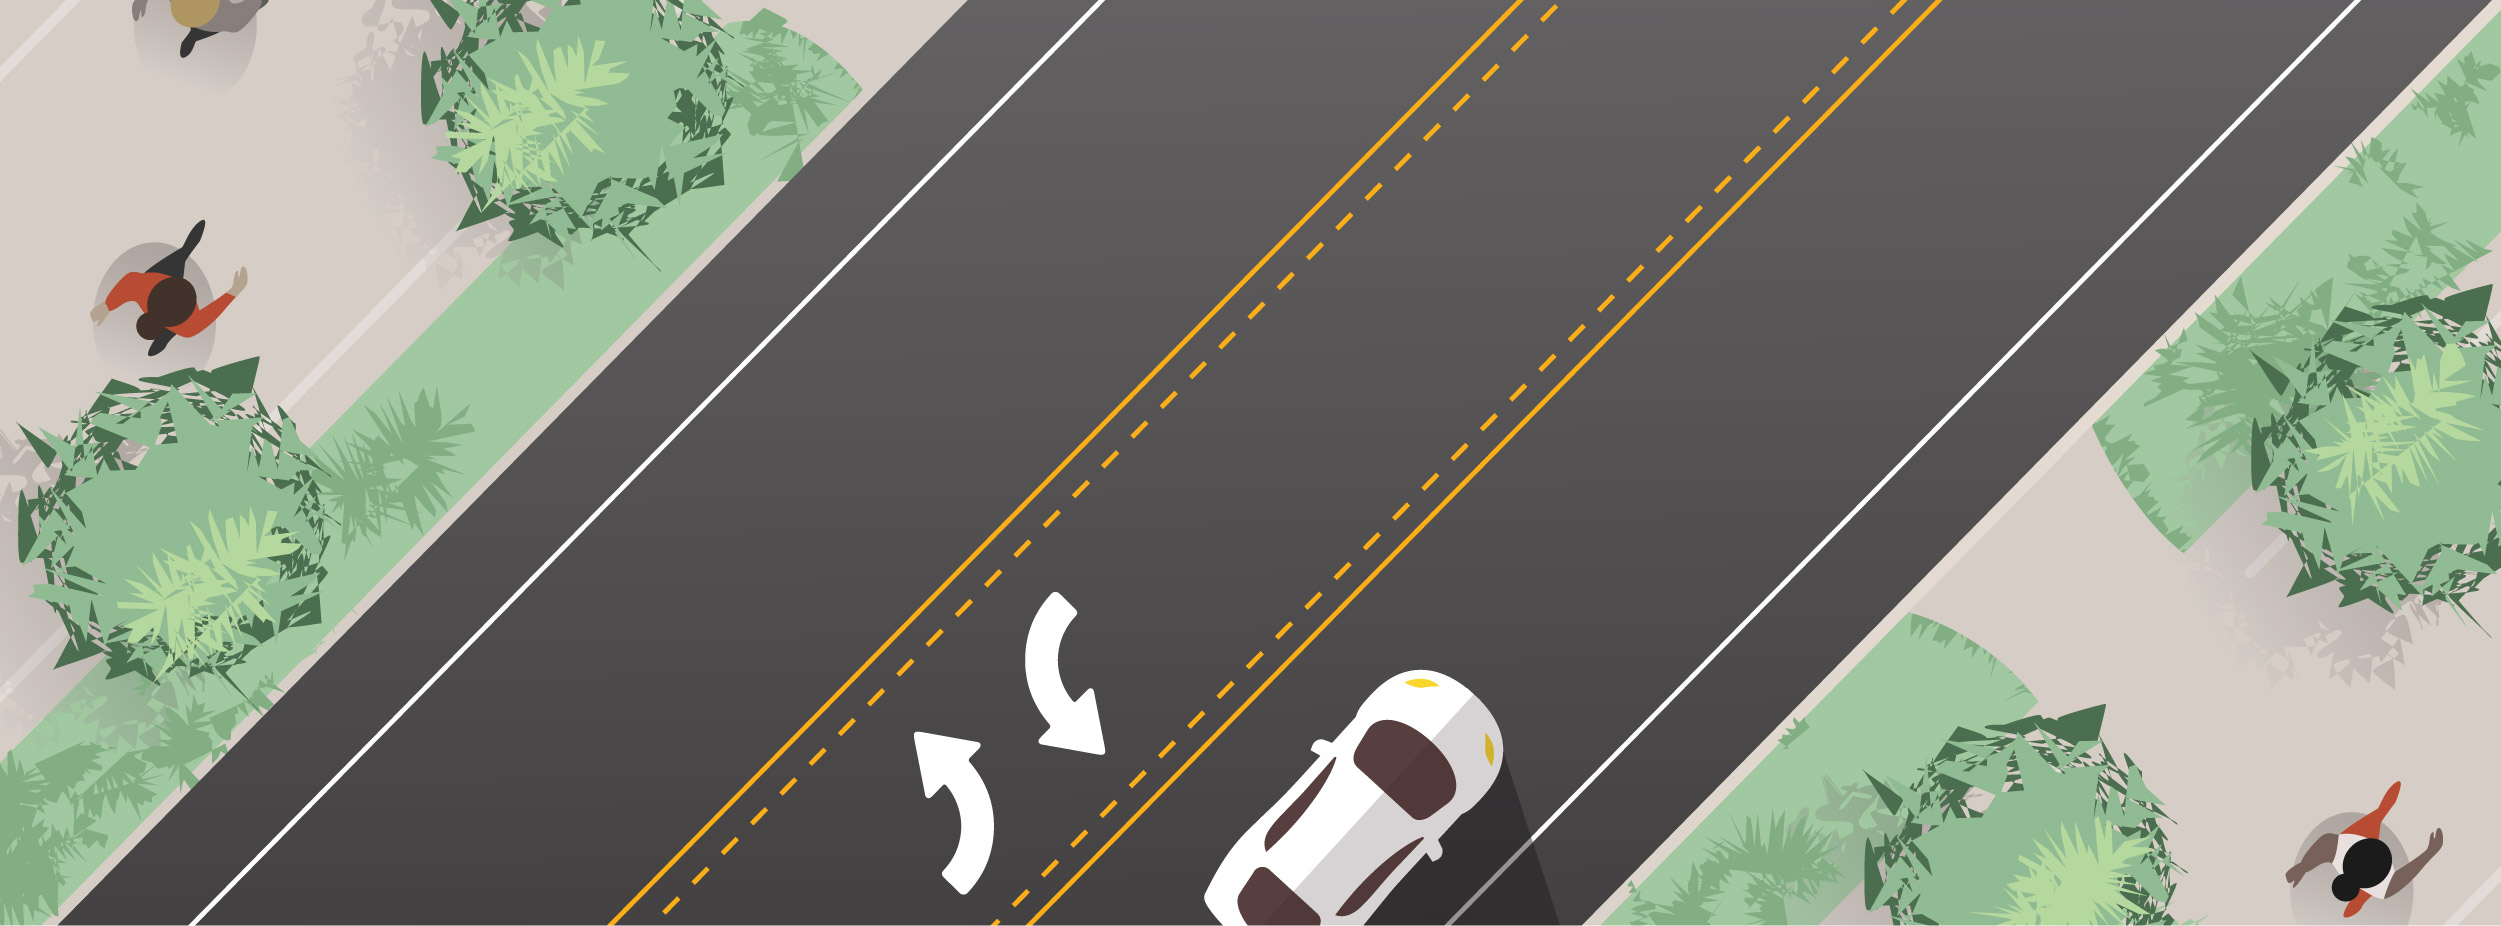 two-way left-turn lanes